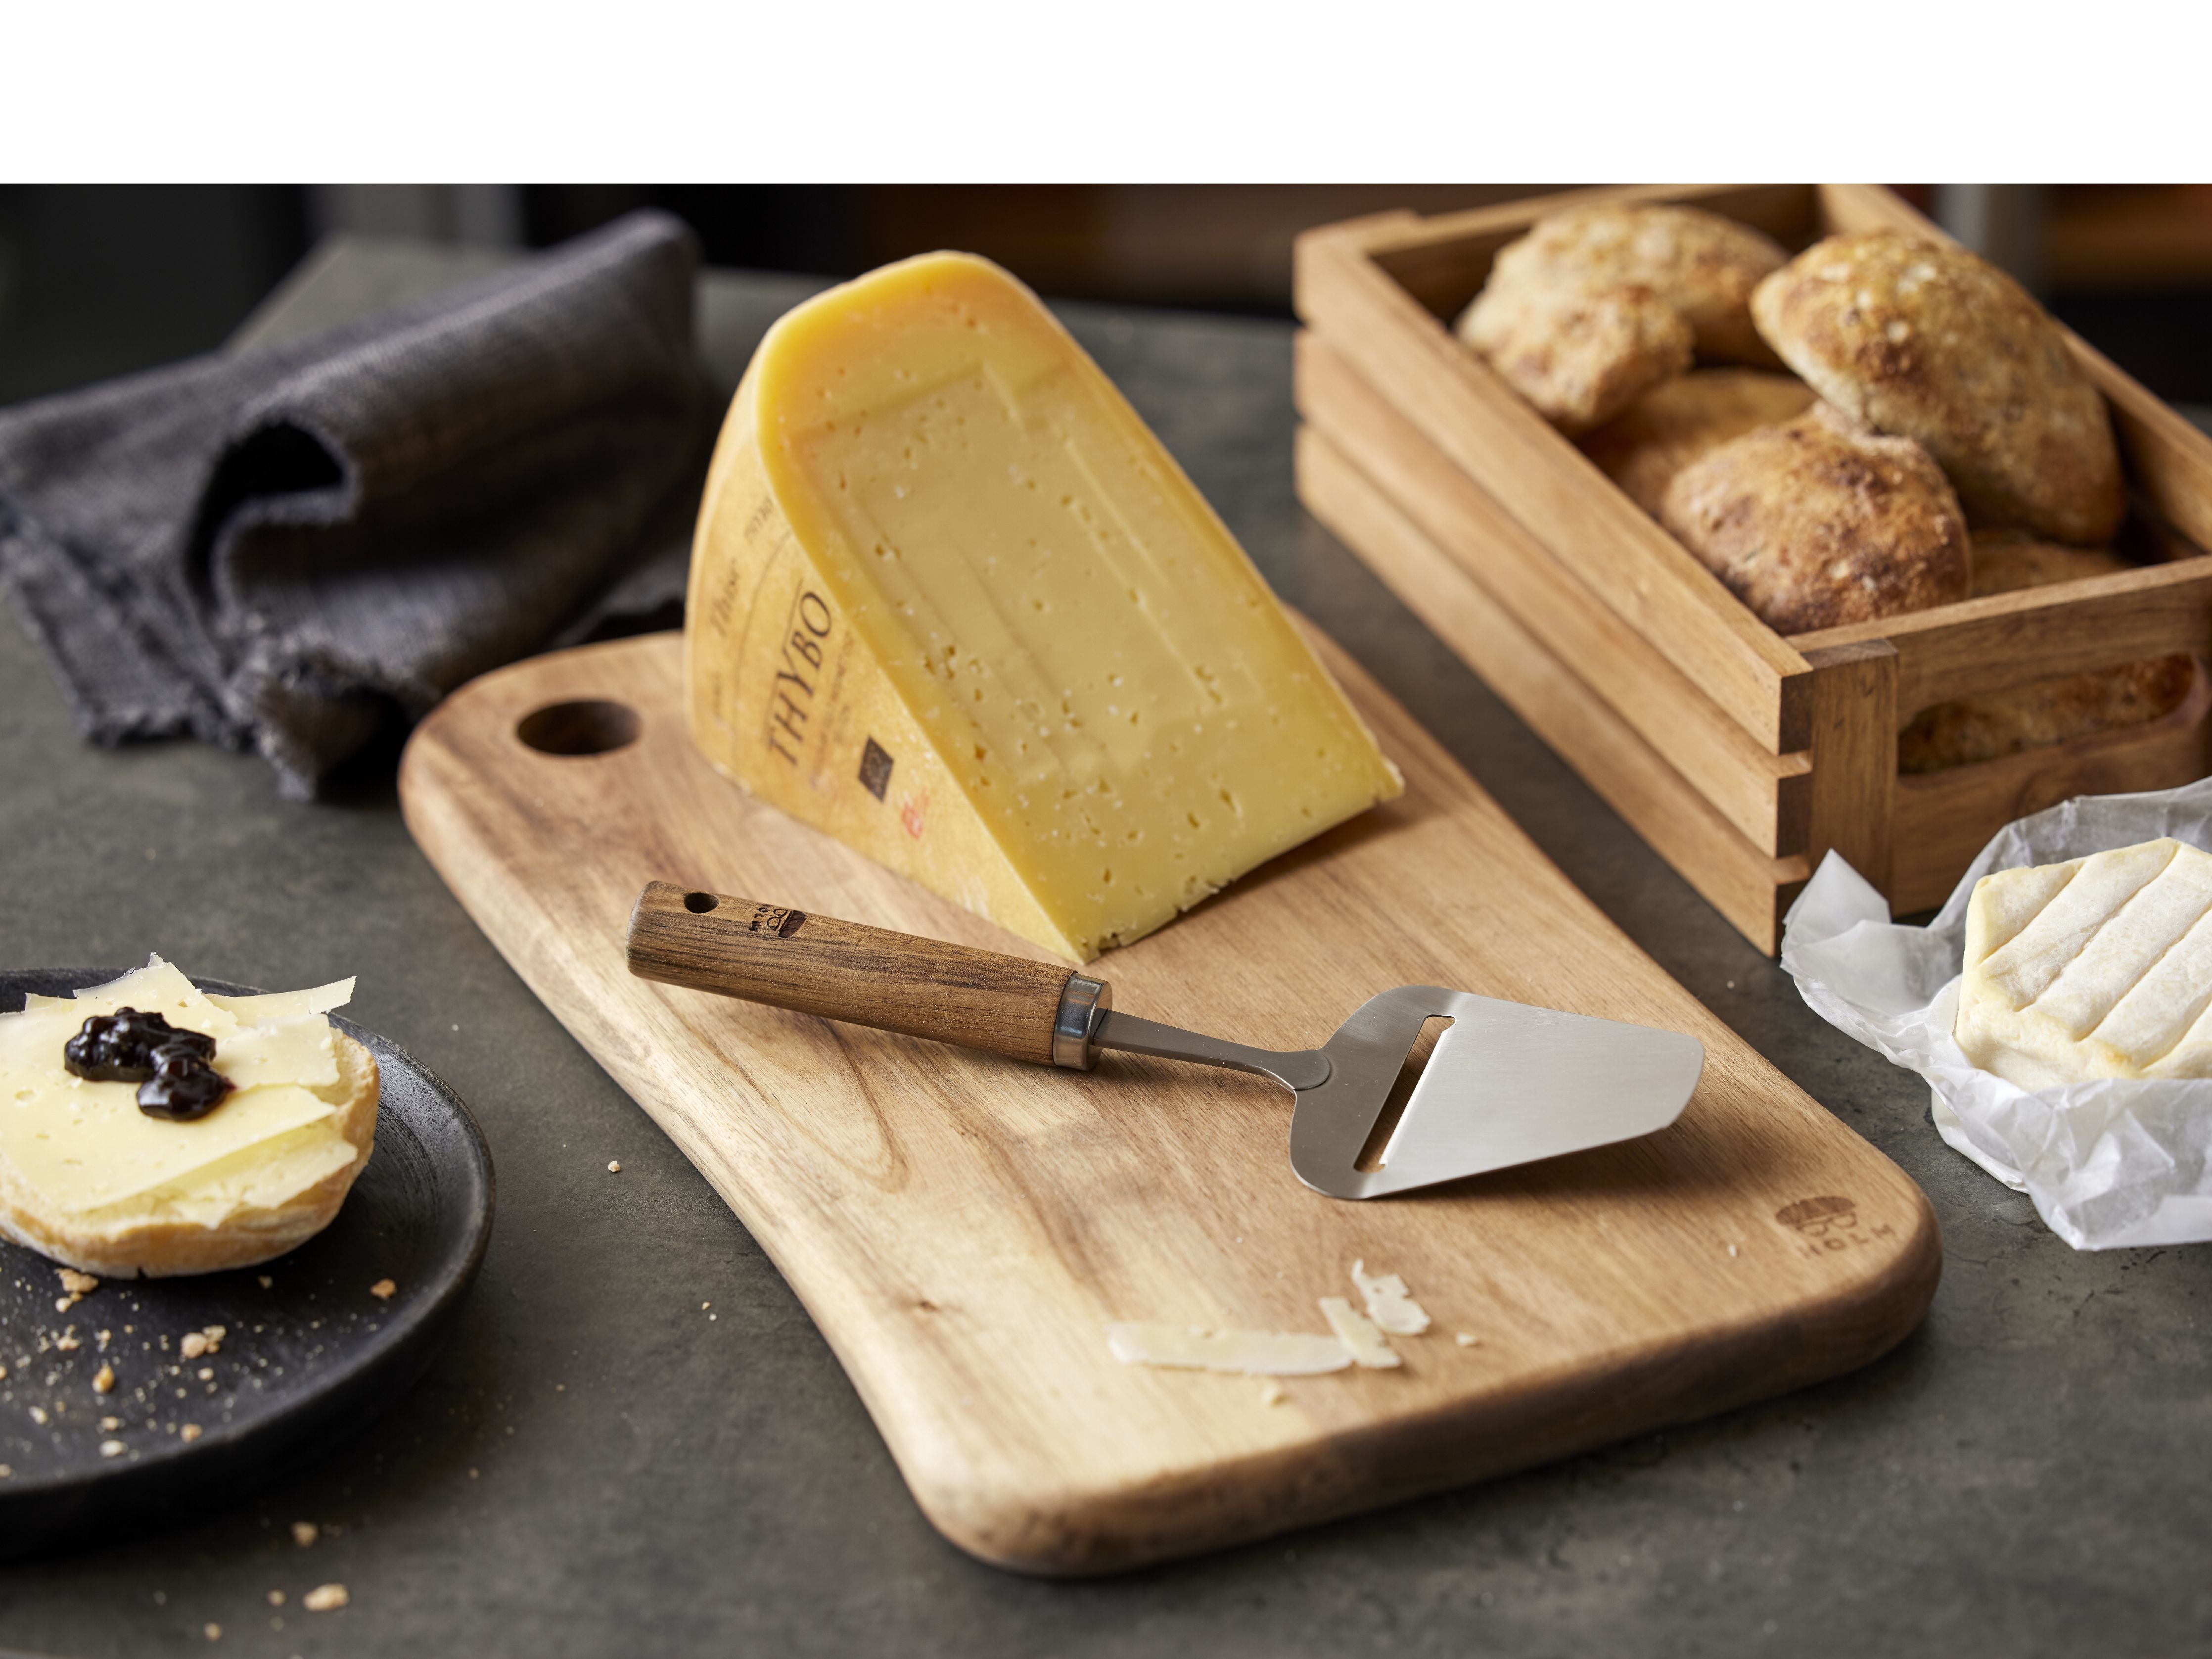 Rougoute de fromage Holm, marron